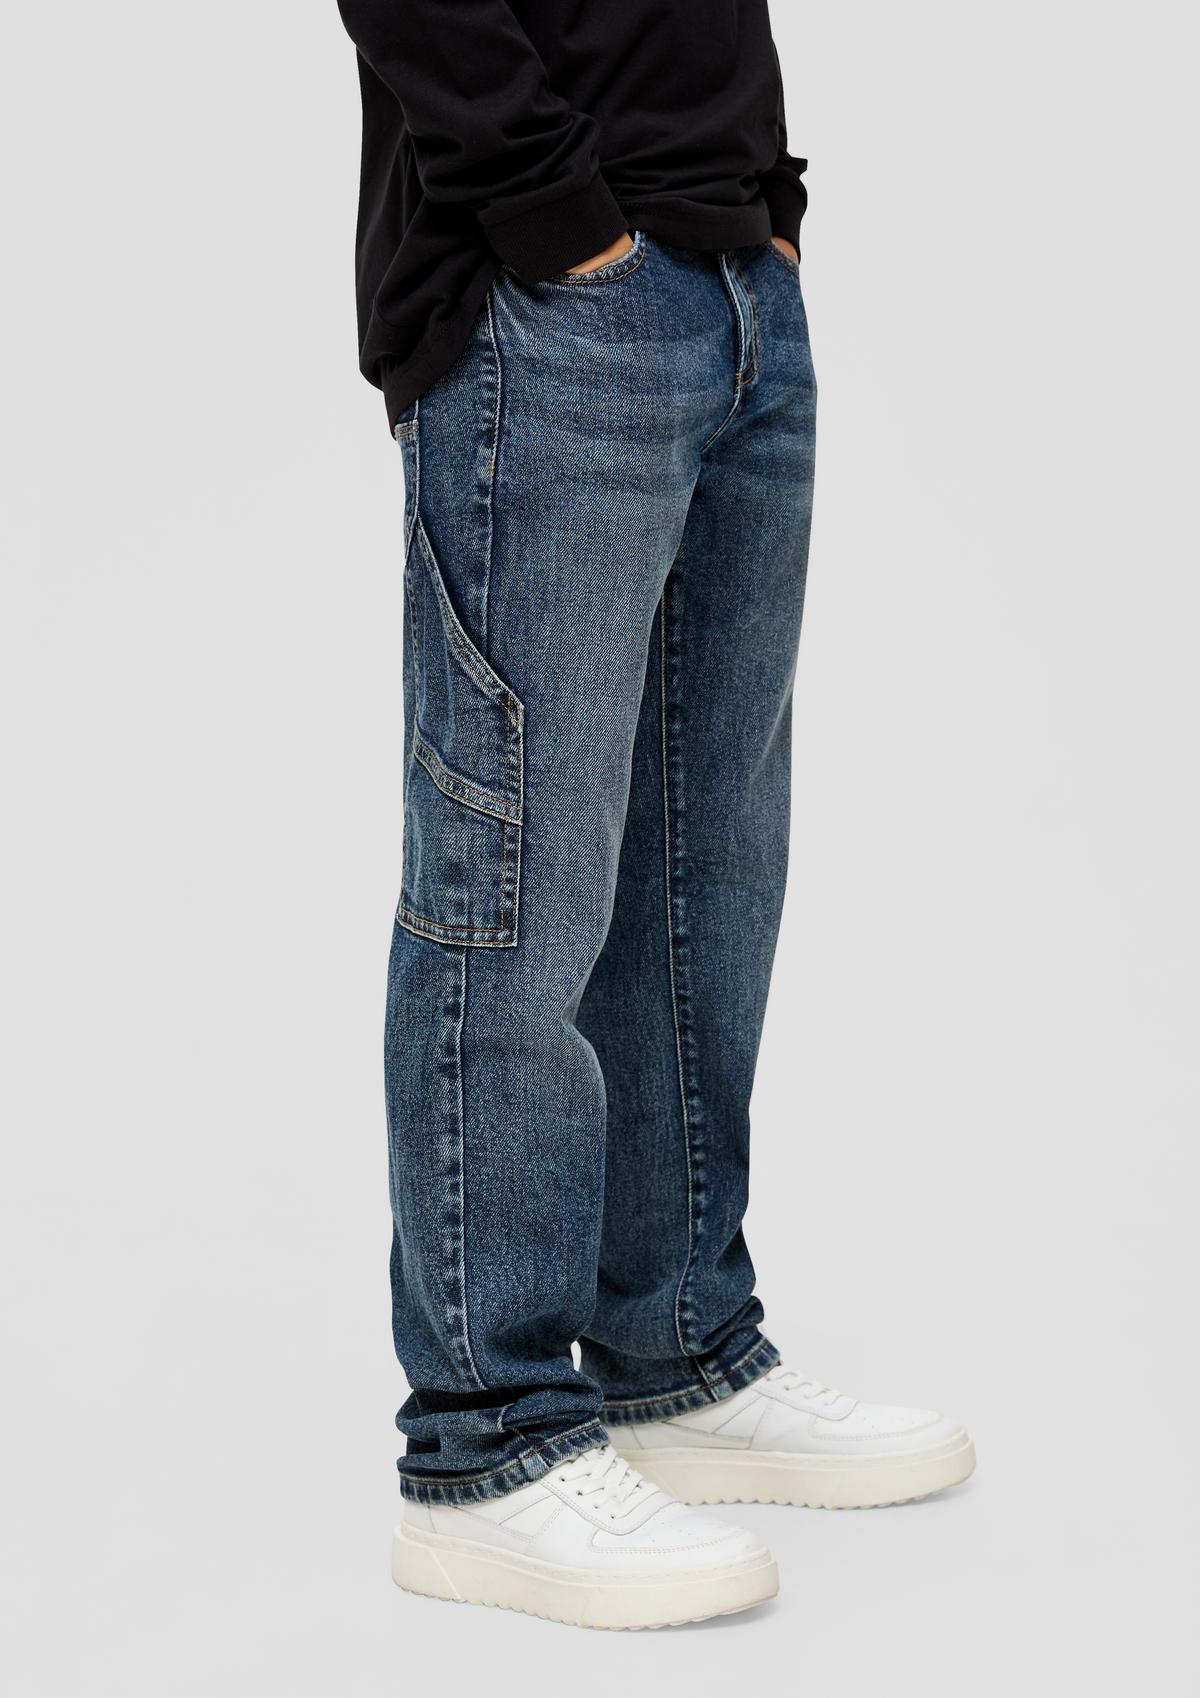 Jeans Pete / Regular Fit / Mid Rise / Slim Leg